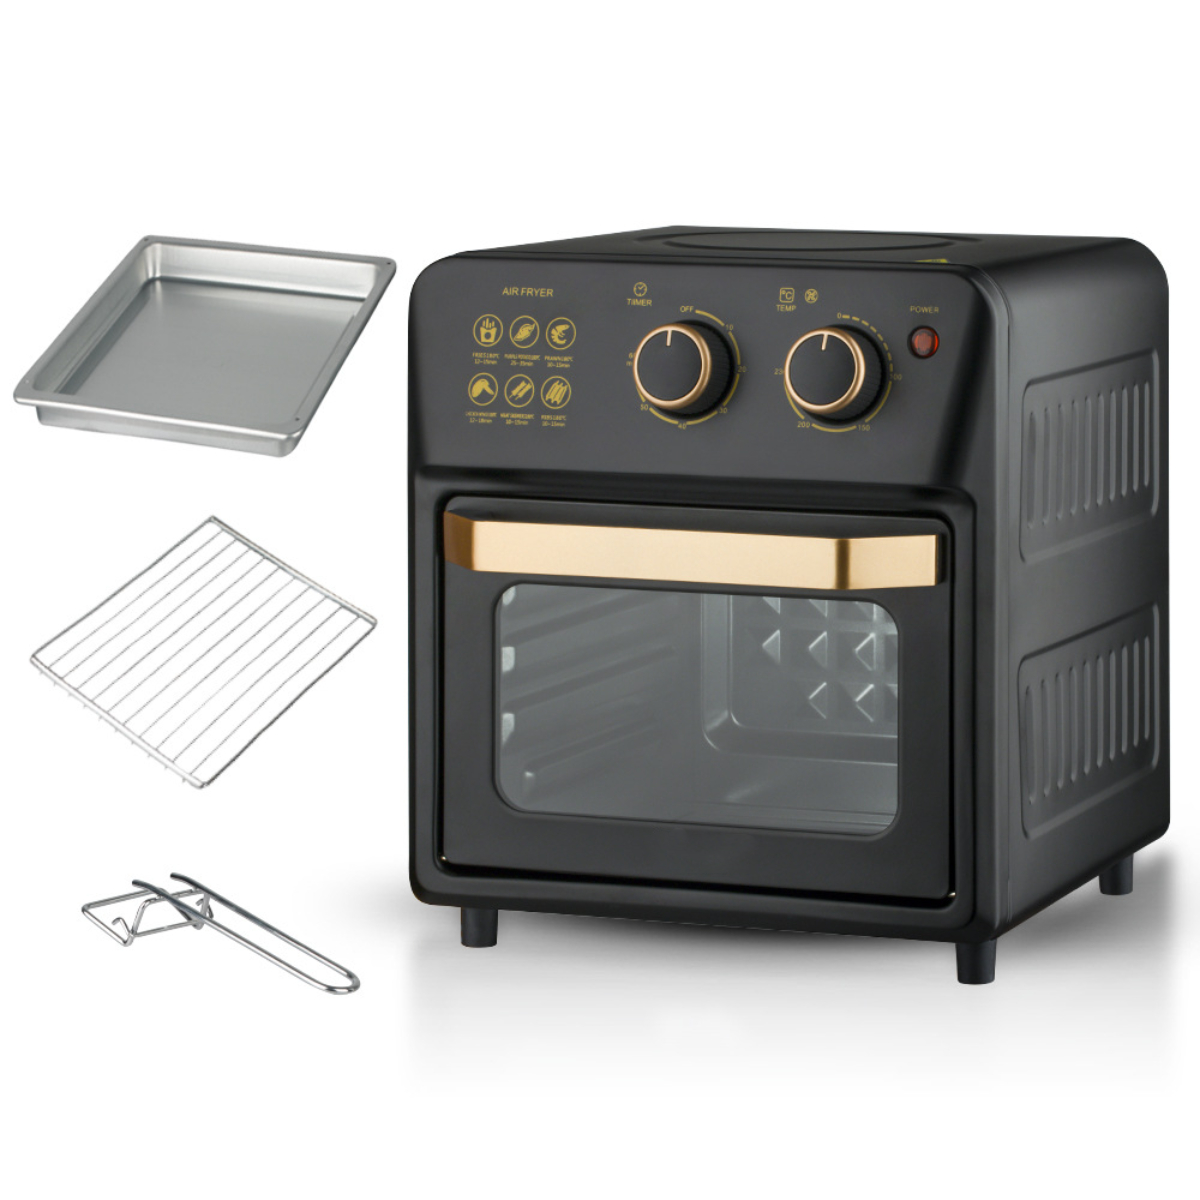 Fryer Oven Air Heißluftfritteuse Fryer Automatisch Smart 14L Elektro-Backofen schwarz 1250 Watt BYTELIKE Multifunktional Home